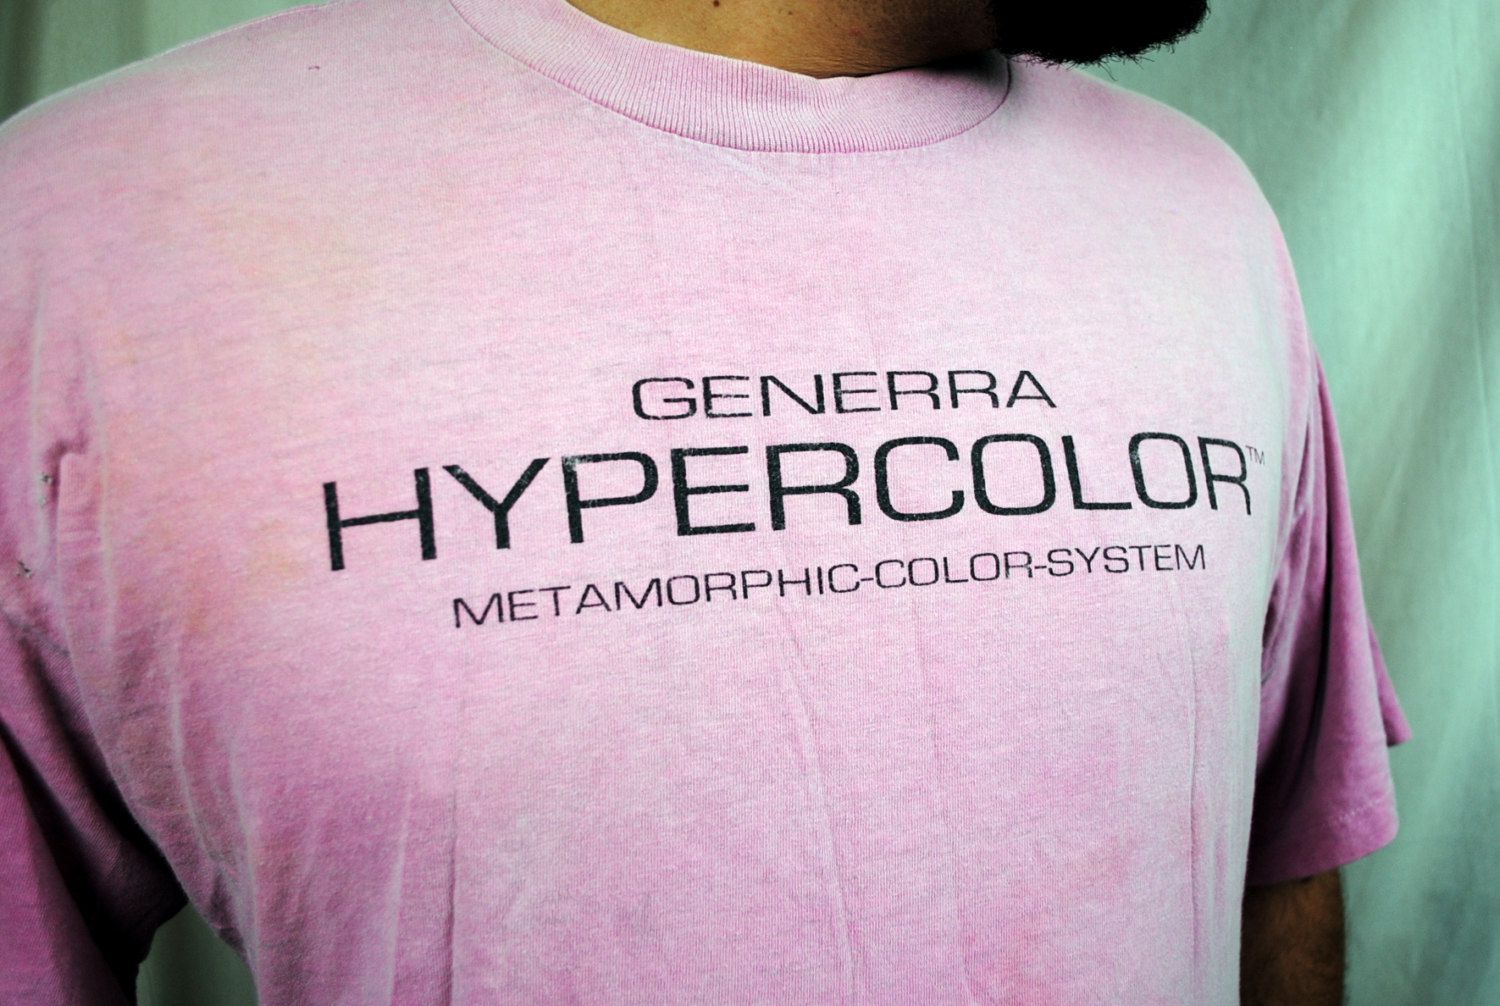 Memory Lane: happened to Hypercolor - Herald